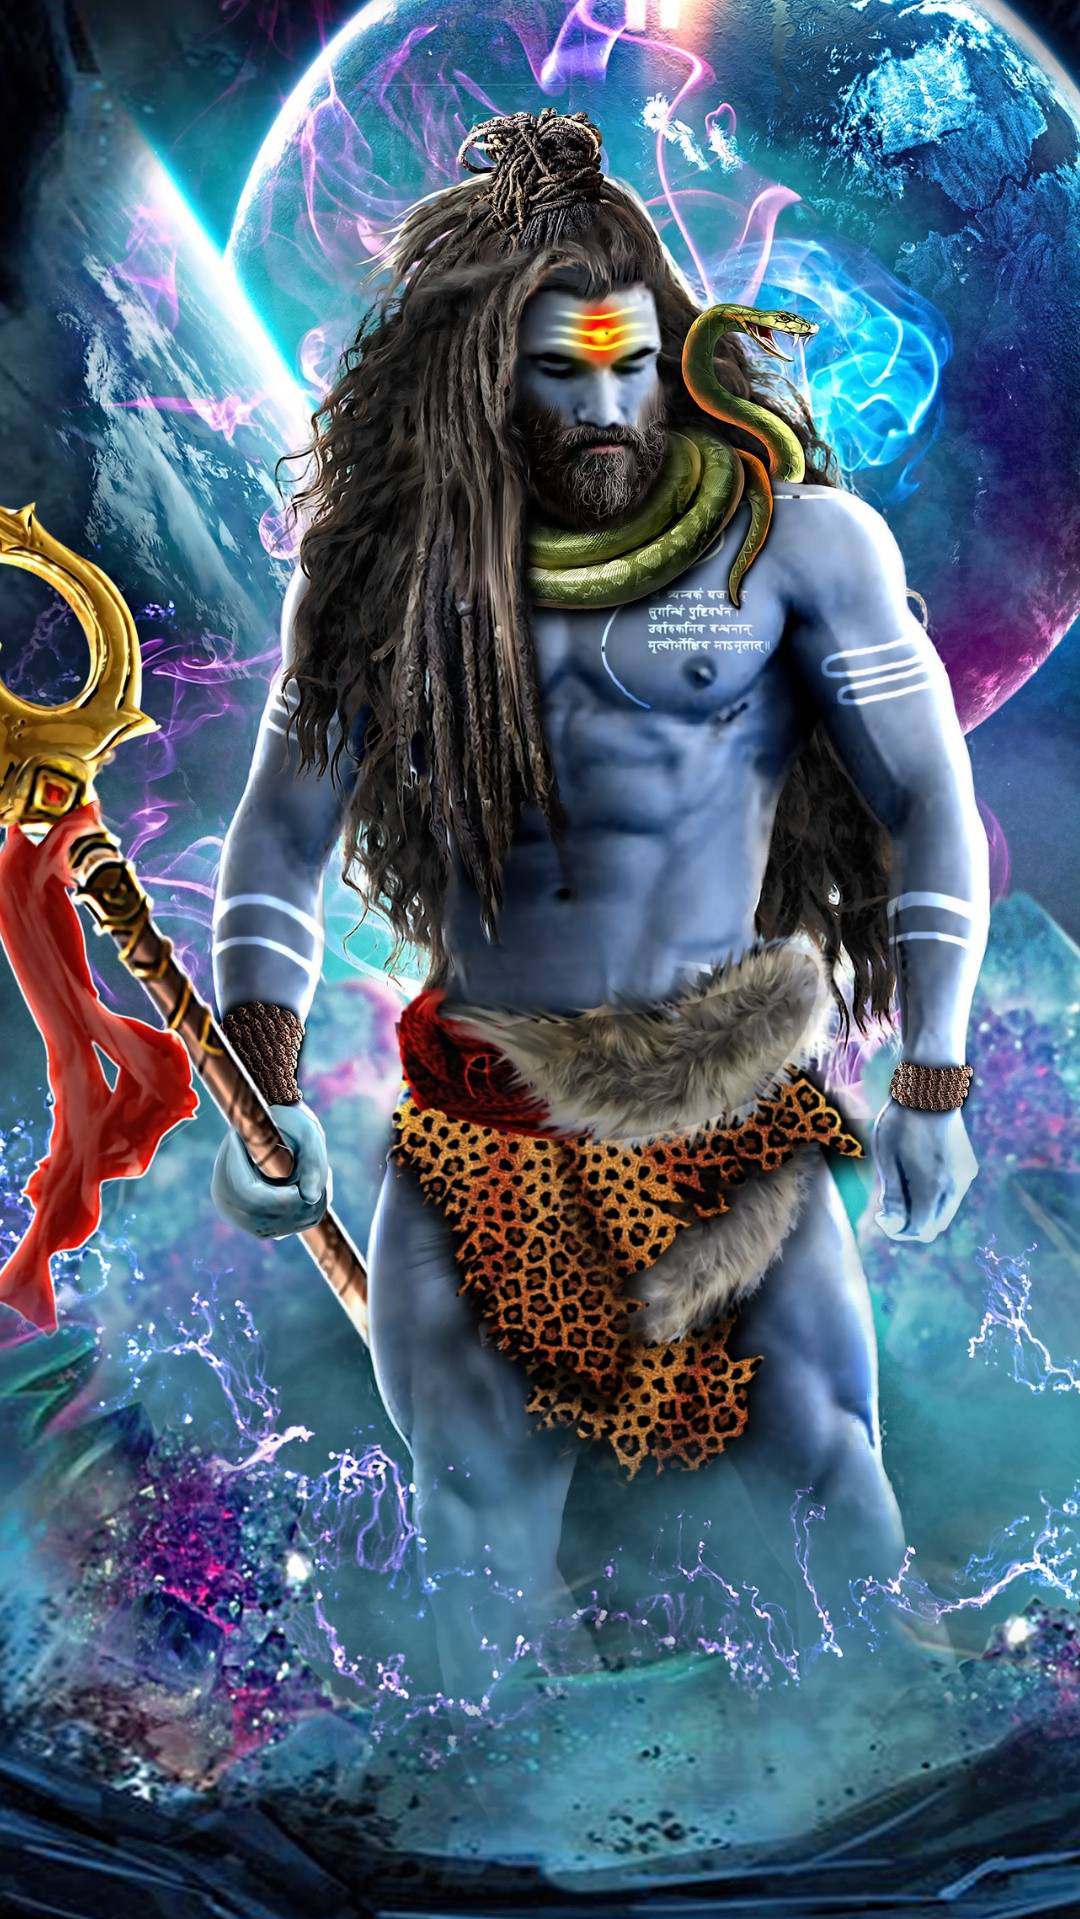 Lord Shiva Art iPhone Wallpaper - iPhone Wallpapers